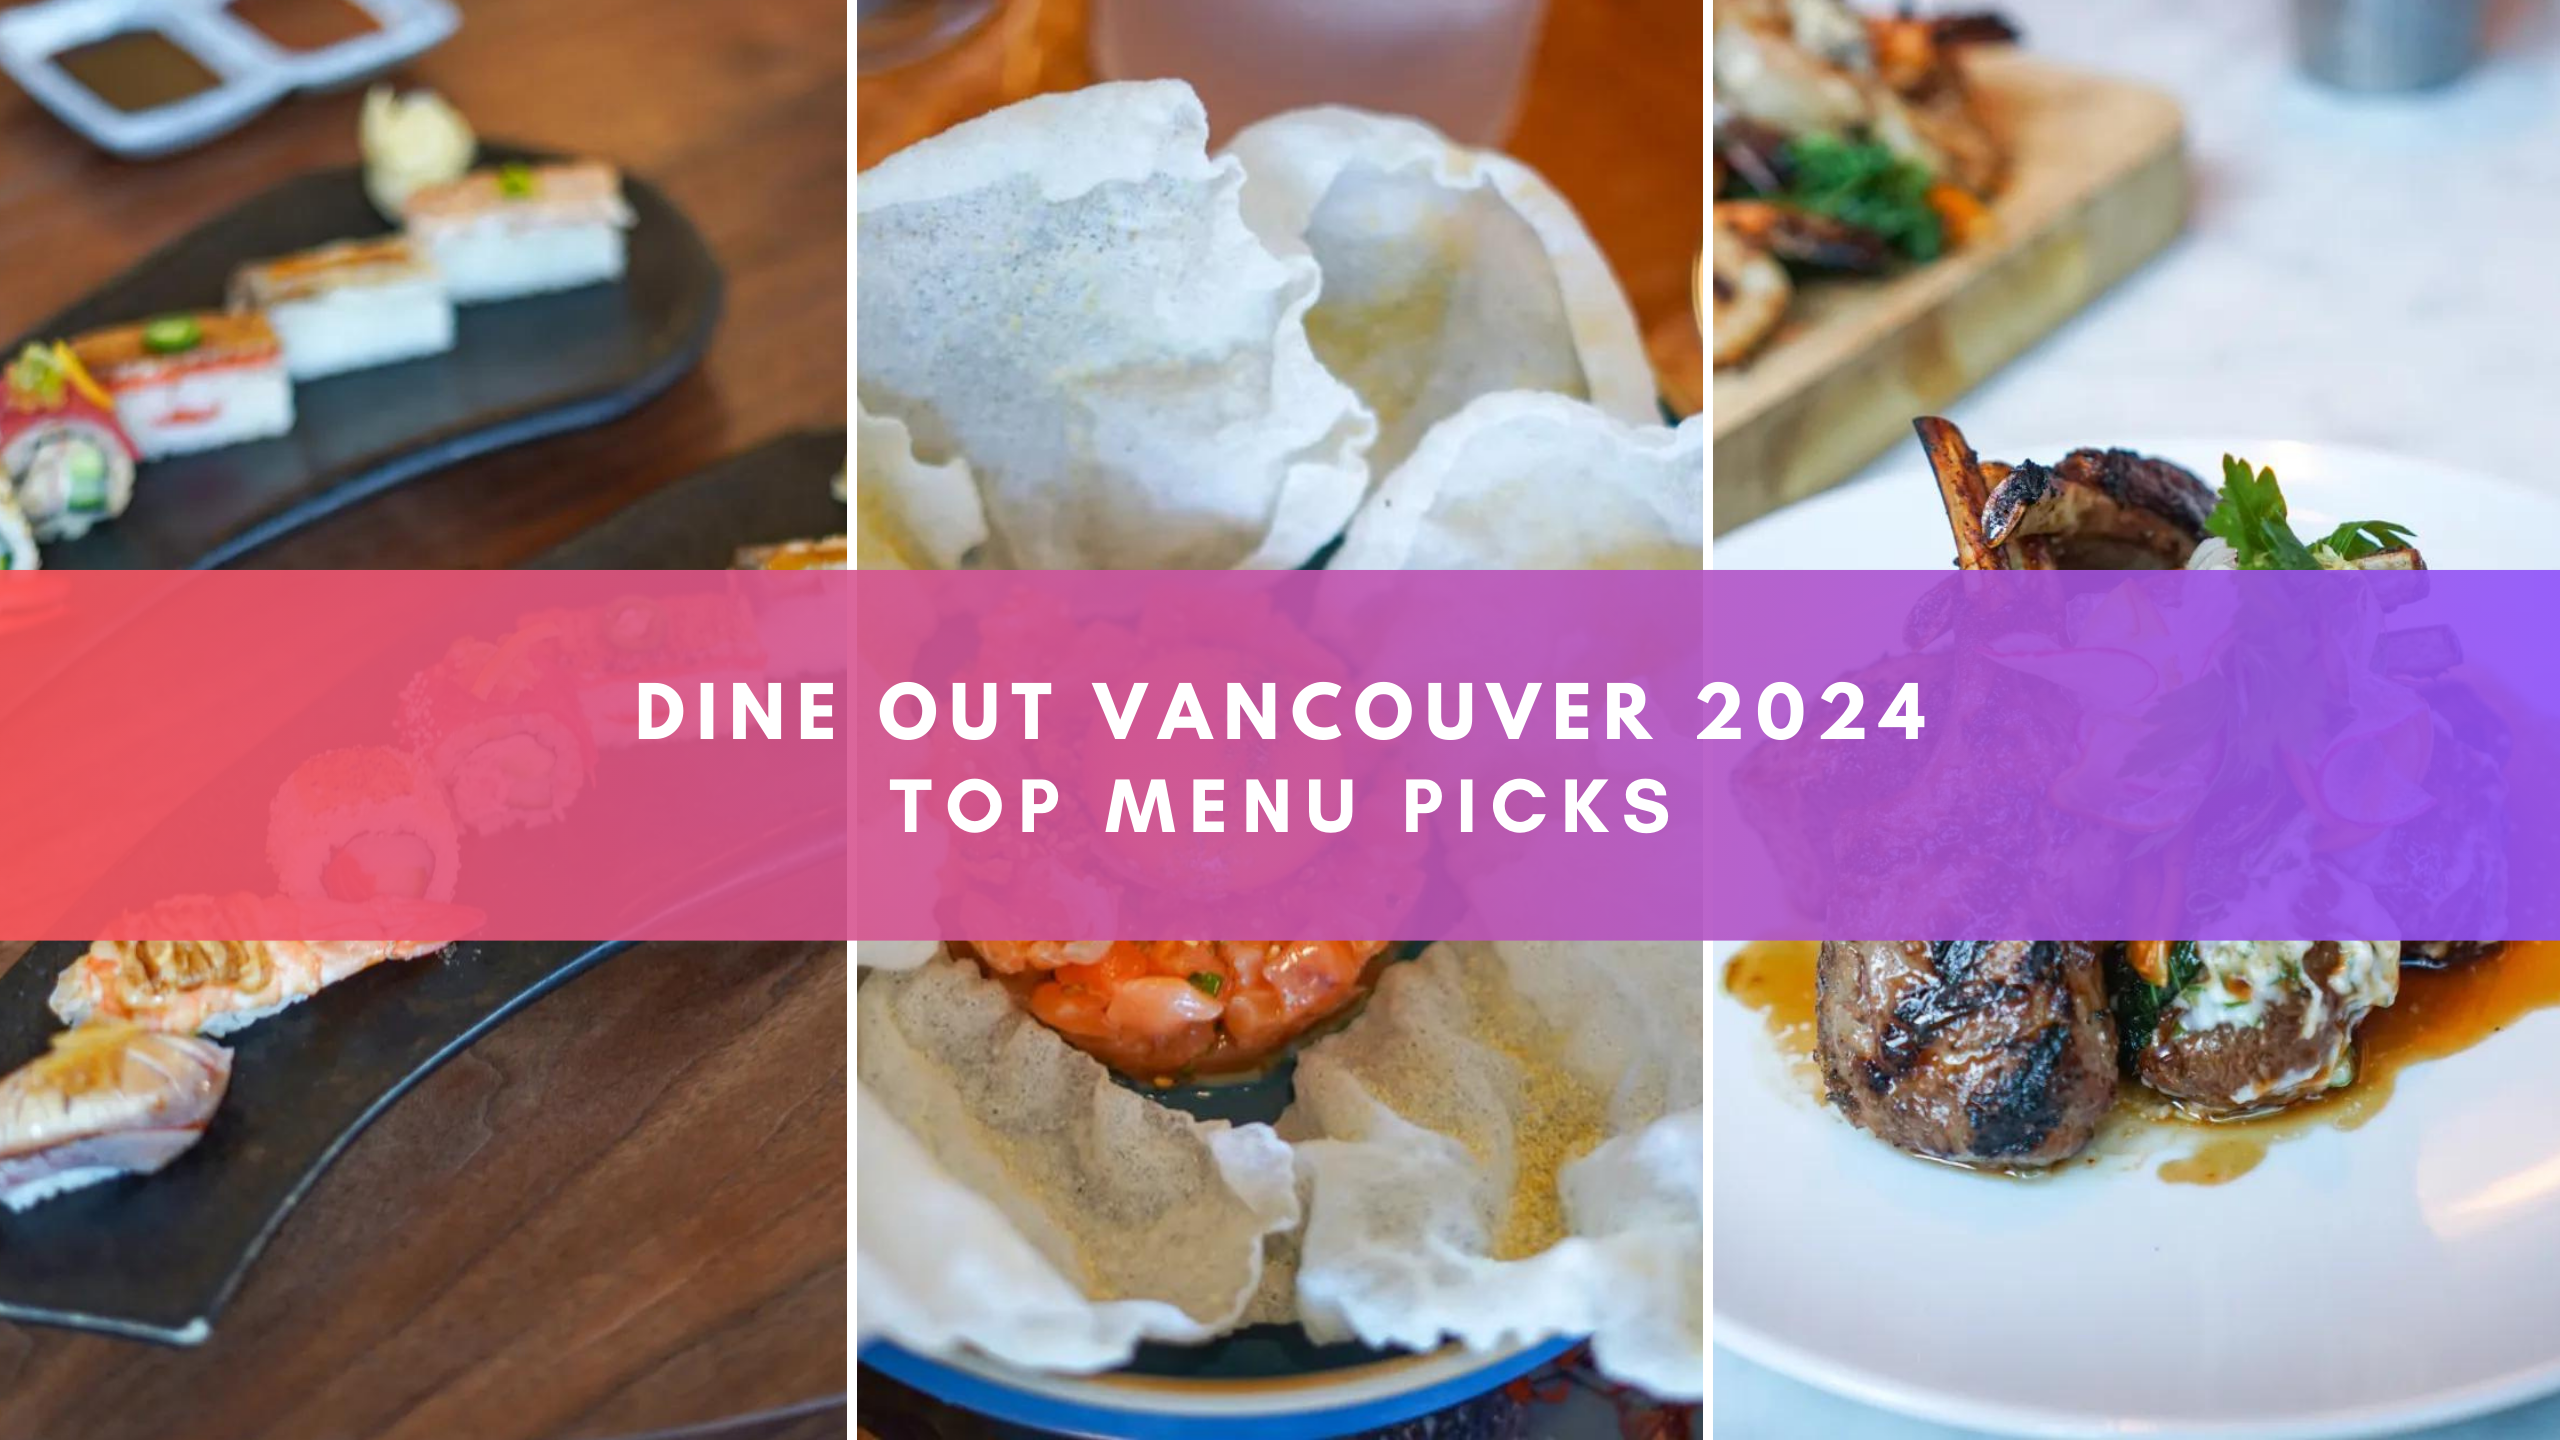 Dine out vancouver 2024 top menu picks